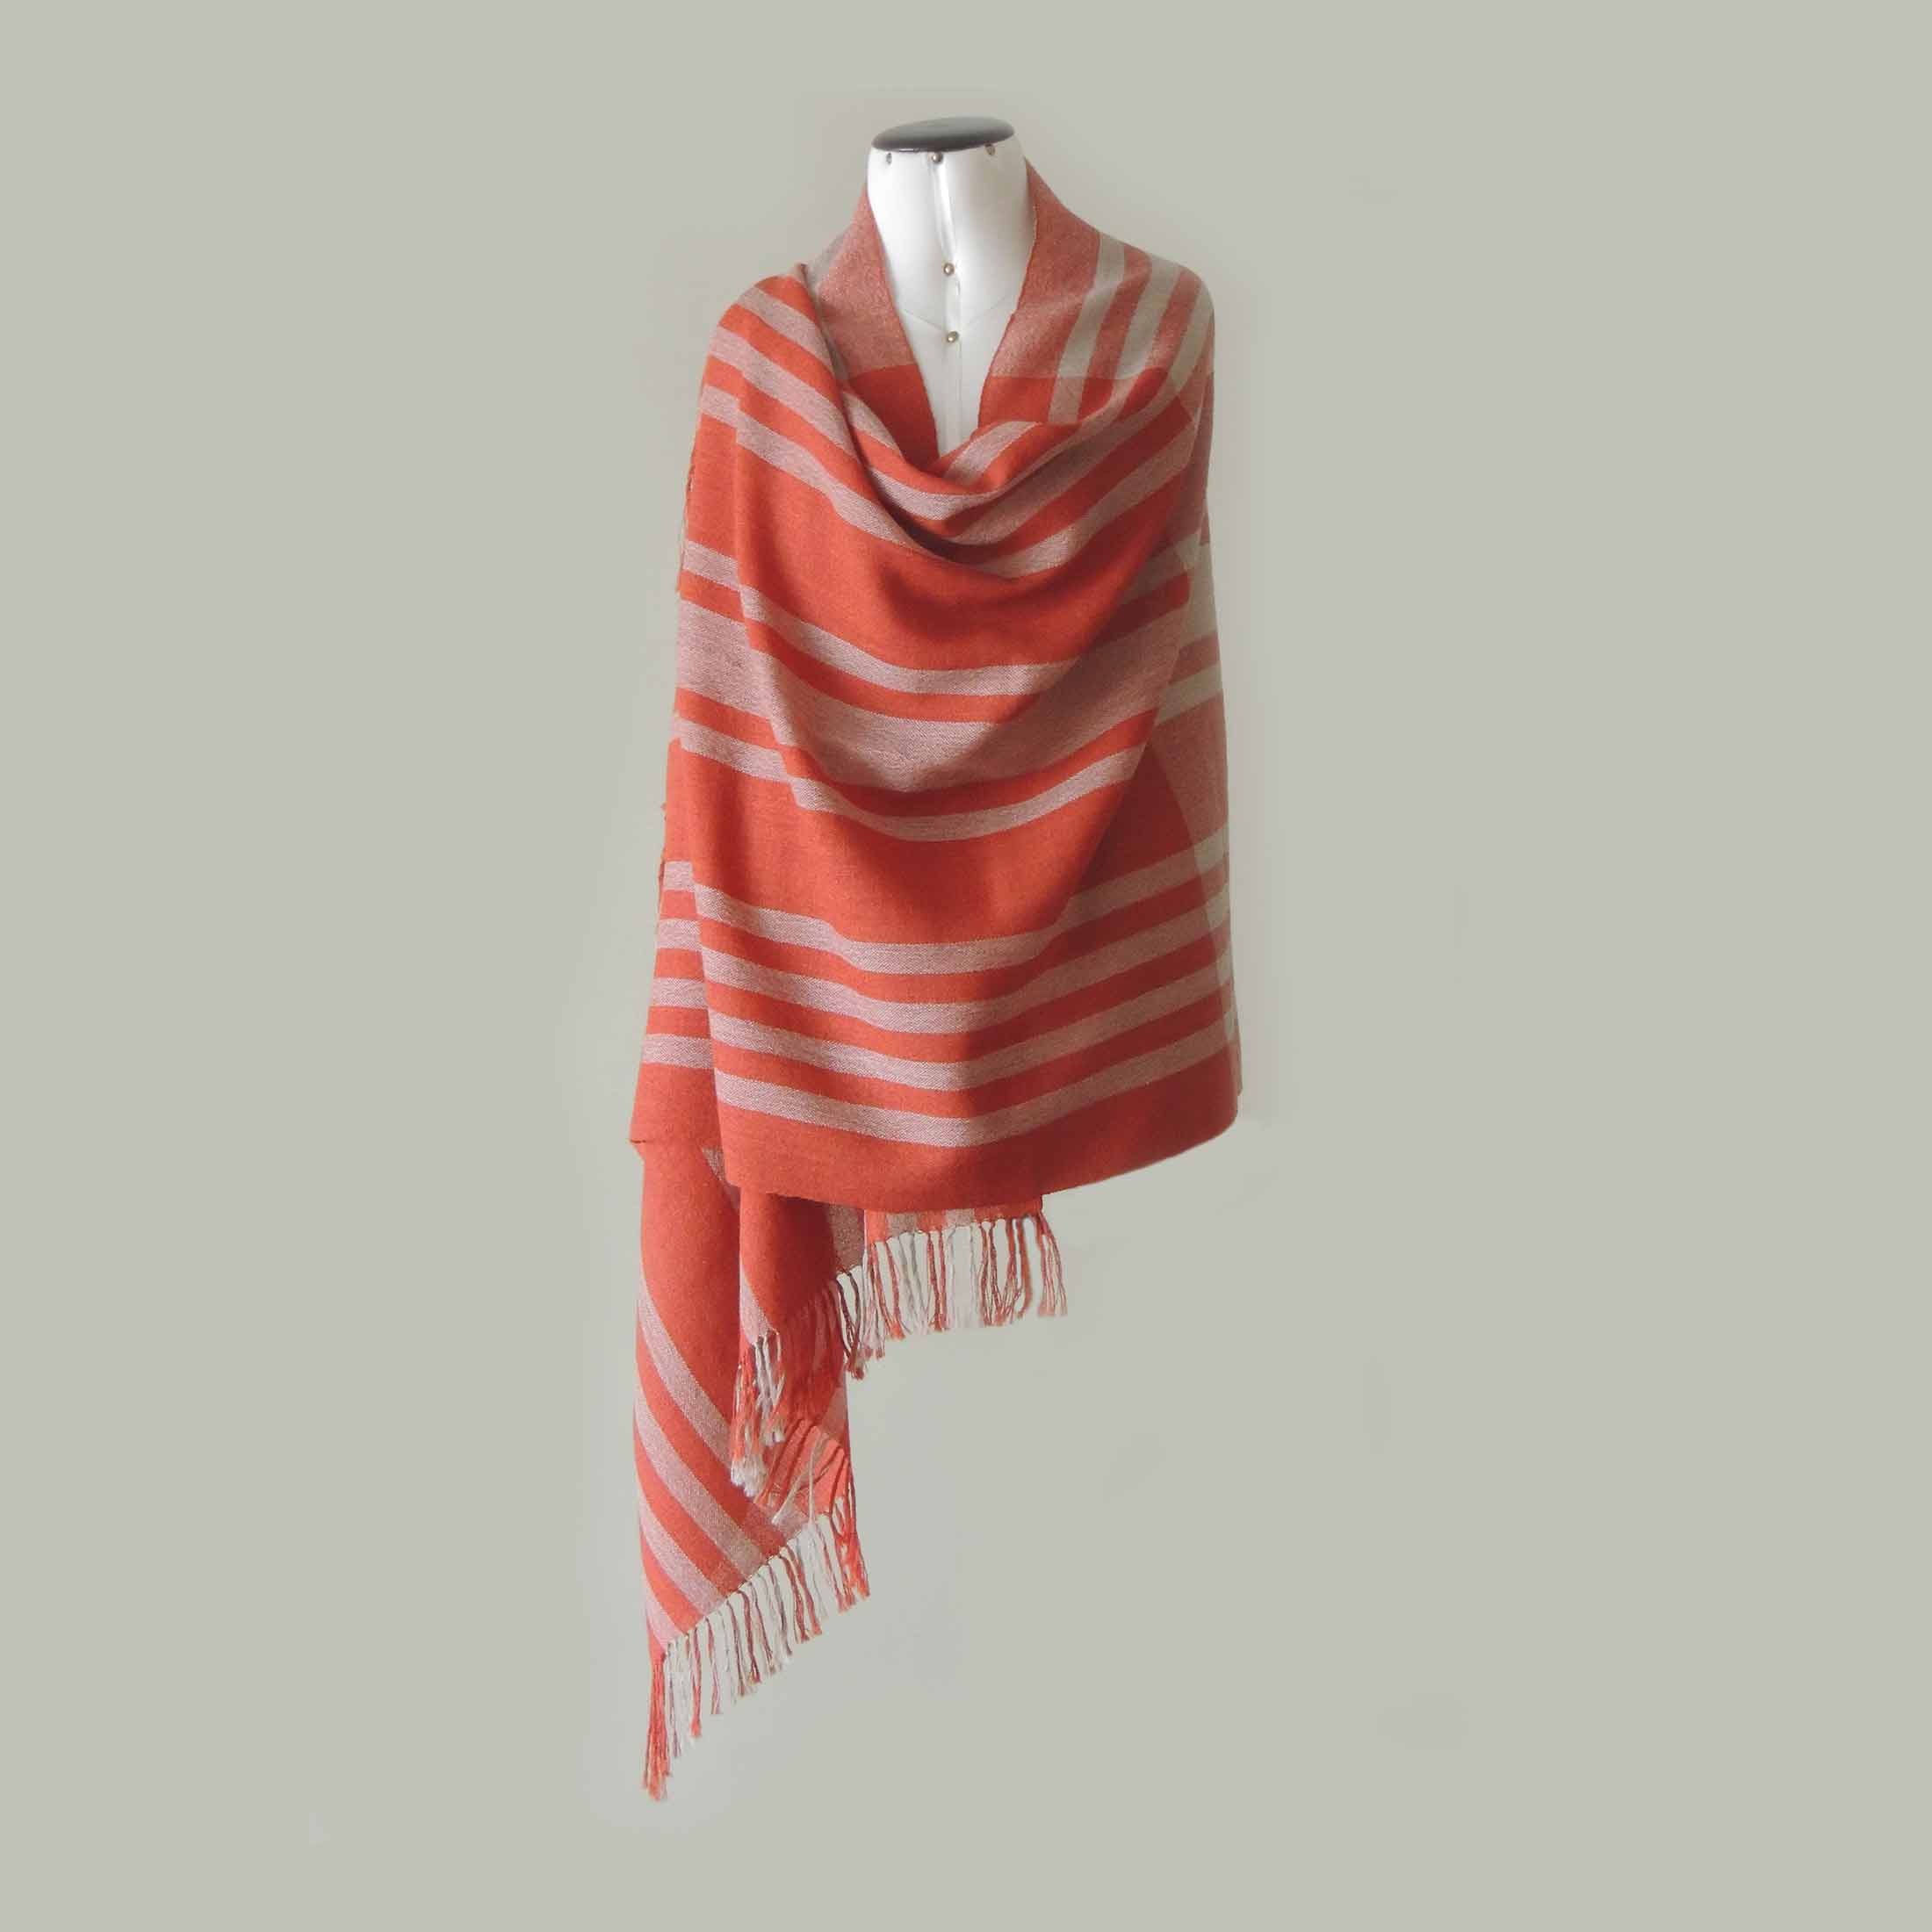 PopsFL knitwear Peru wholesale manufactorhandwoven shawl - stole baby alpaca striped two colors